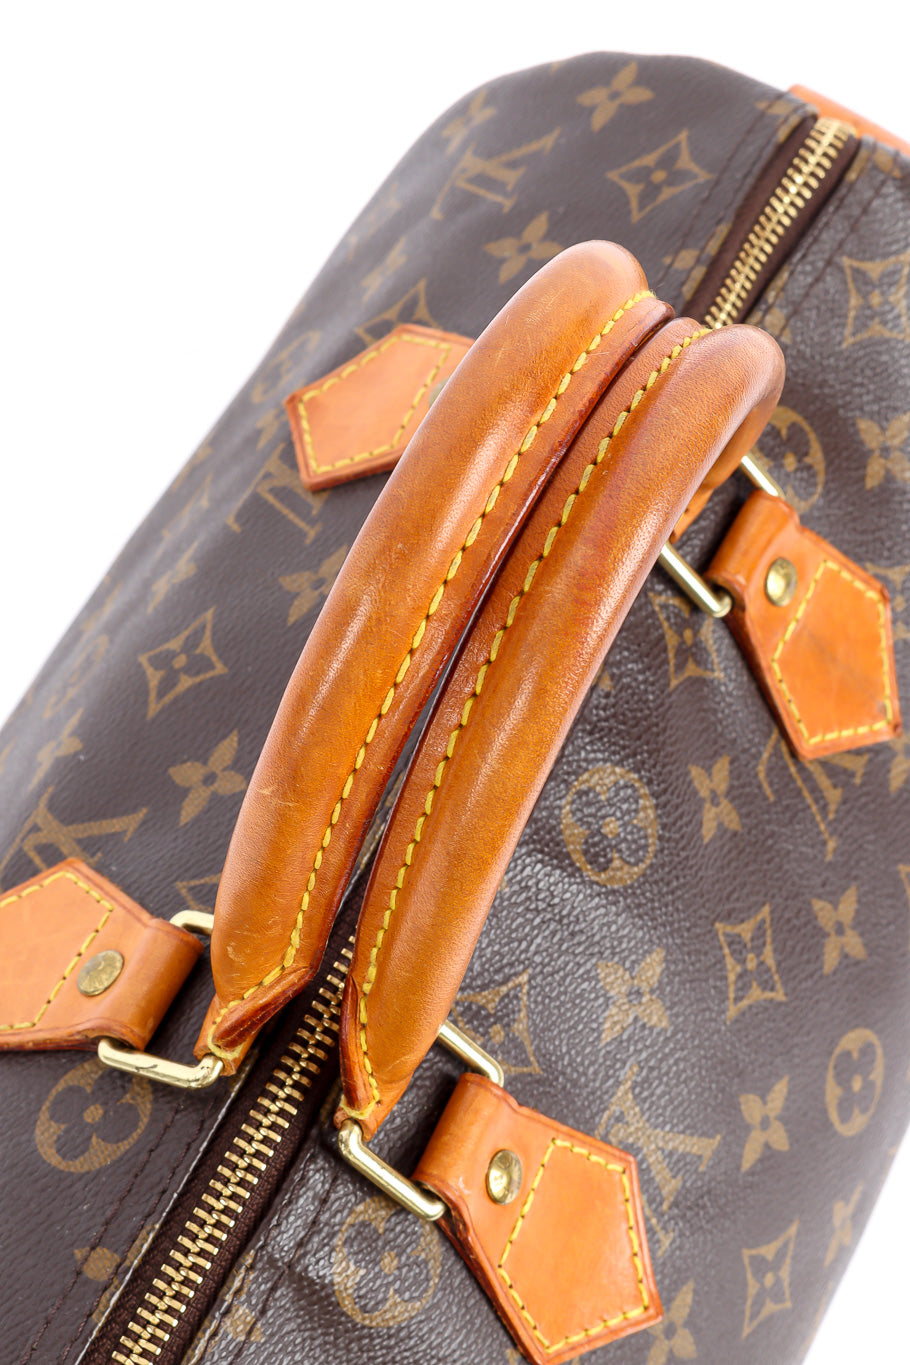 Louis Vuitton classic monogram speedy 30 bag handle details @recessla